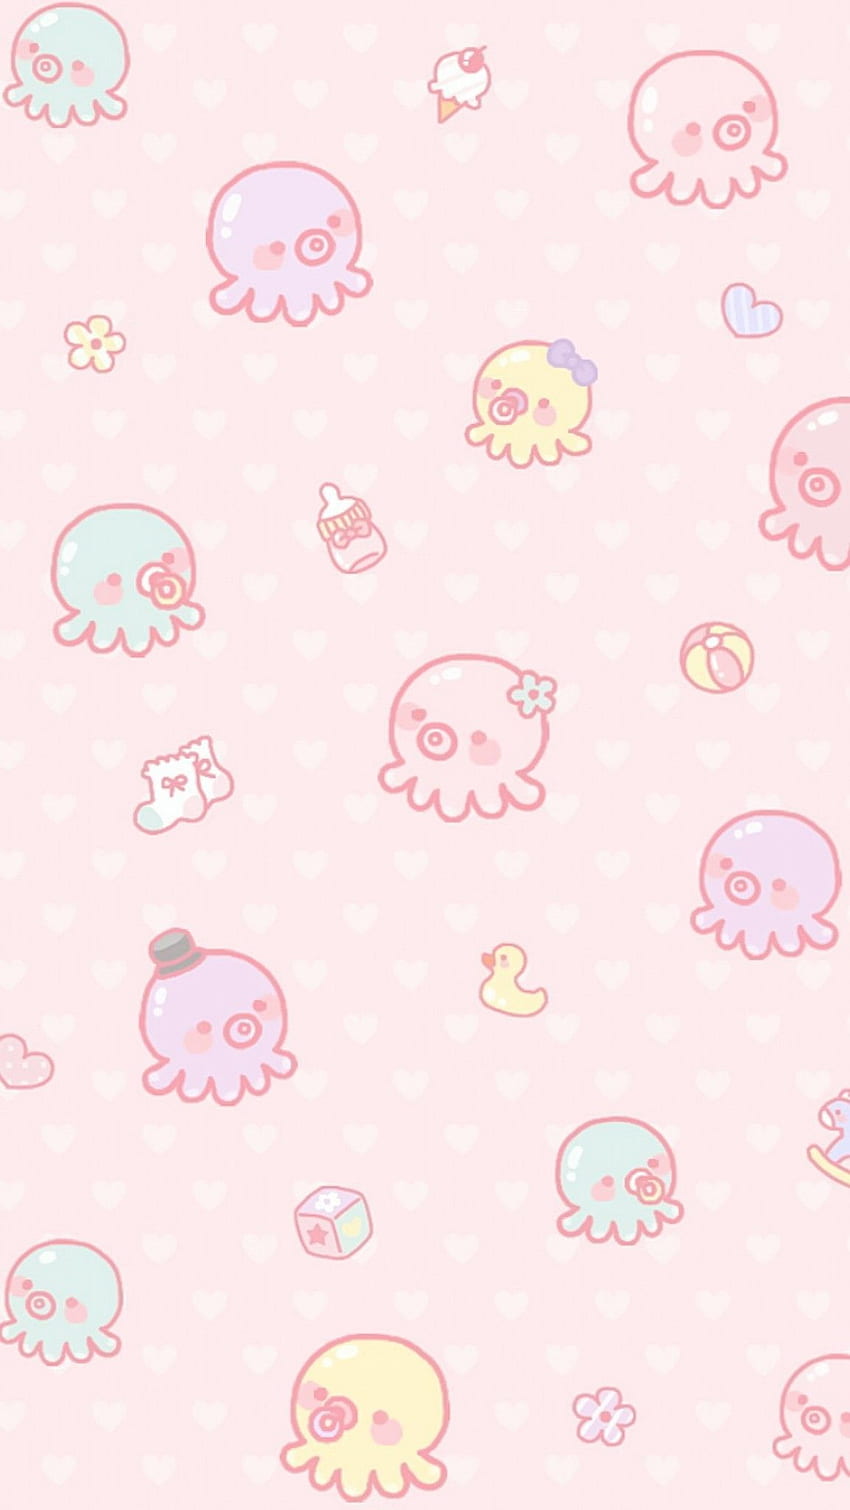 Cute Kawaii Wallpapers for Mobile  PixelsTalkNet